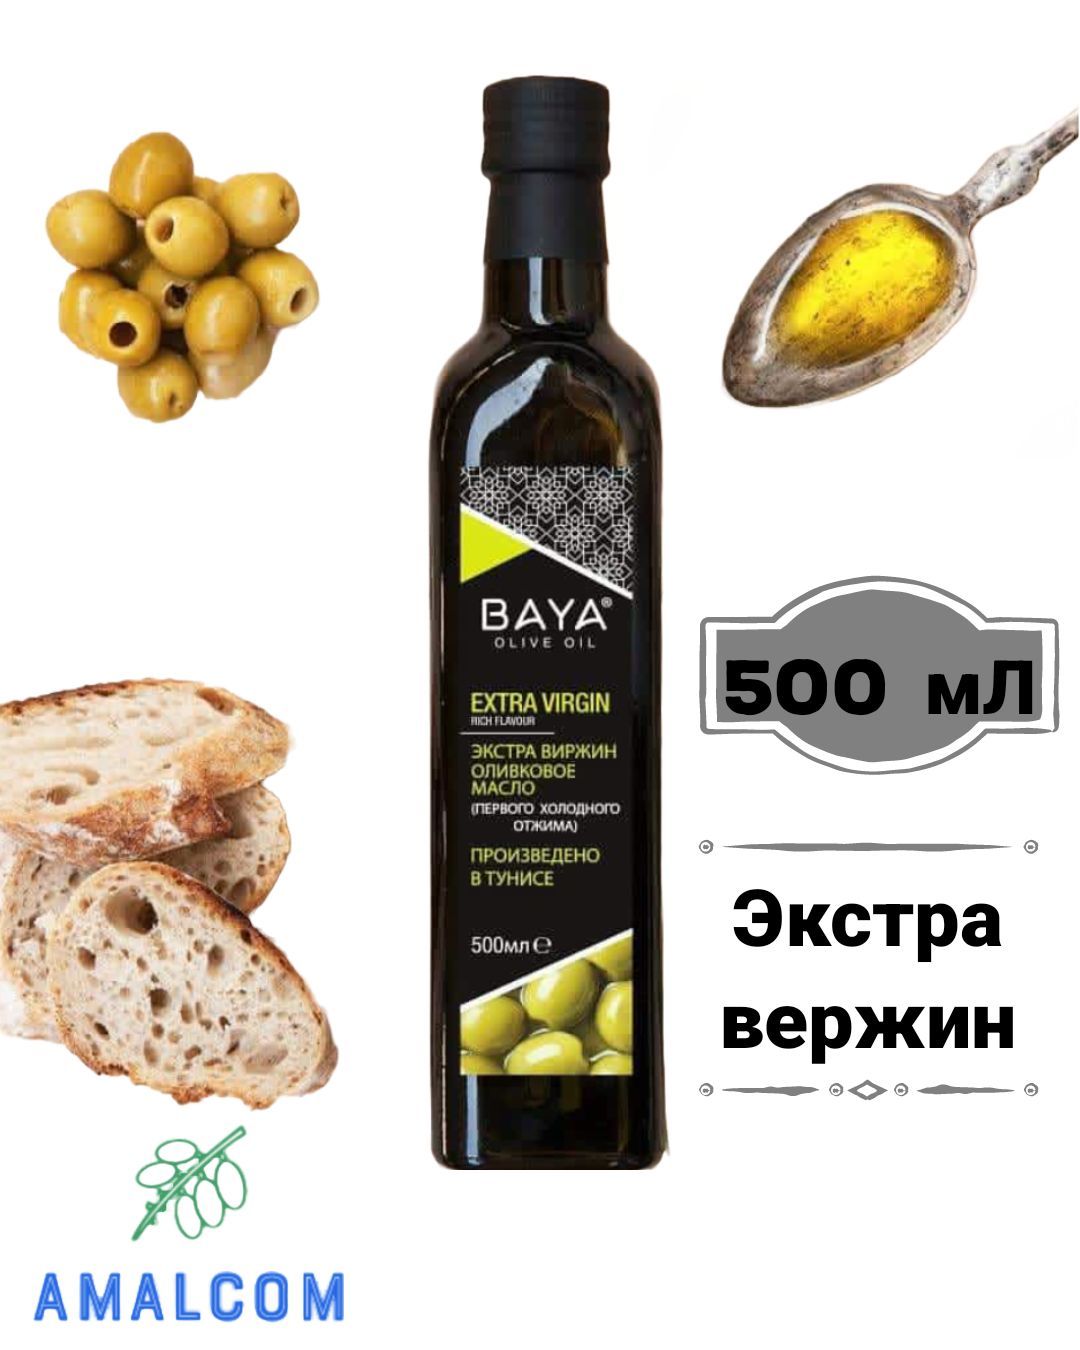 Оливковое масло baya. Baya масло оливковое. Бутылка оливкового масла Борхес фрипик.